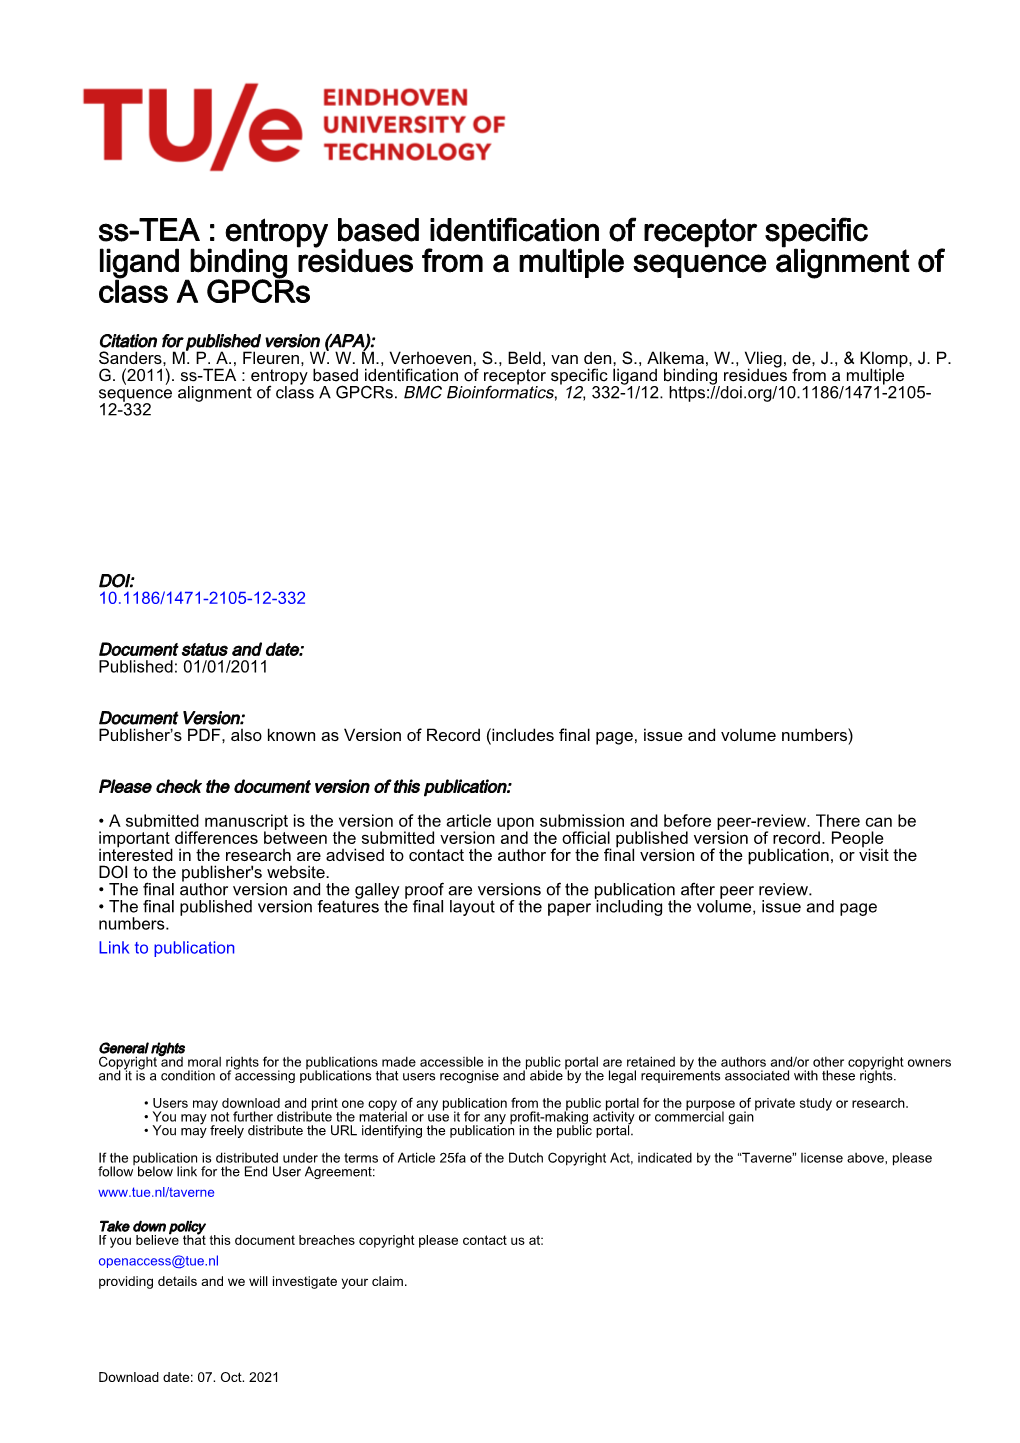 Ss-TEA: Entropy Based Identification of Receptor Specific Ligand